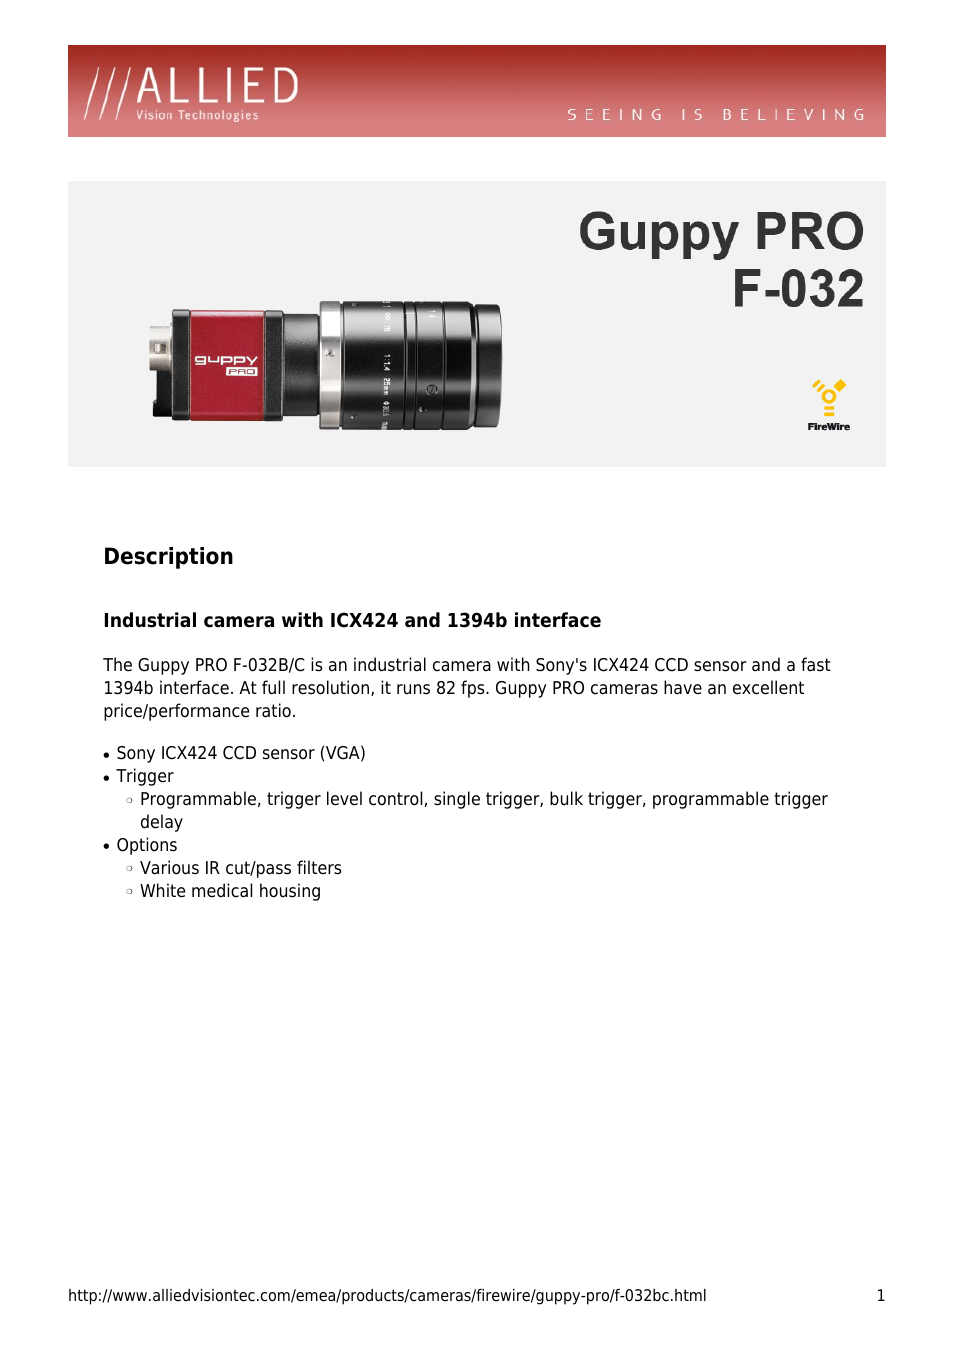 Guppy PRO F-032